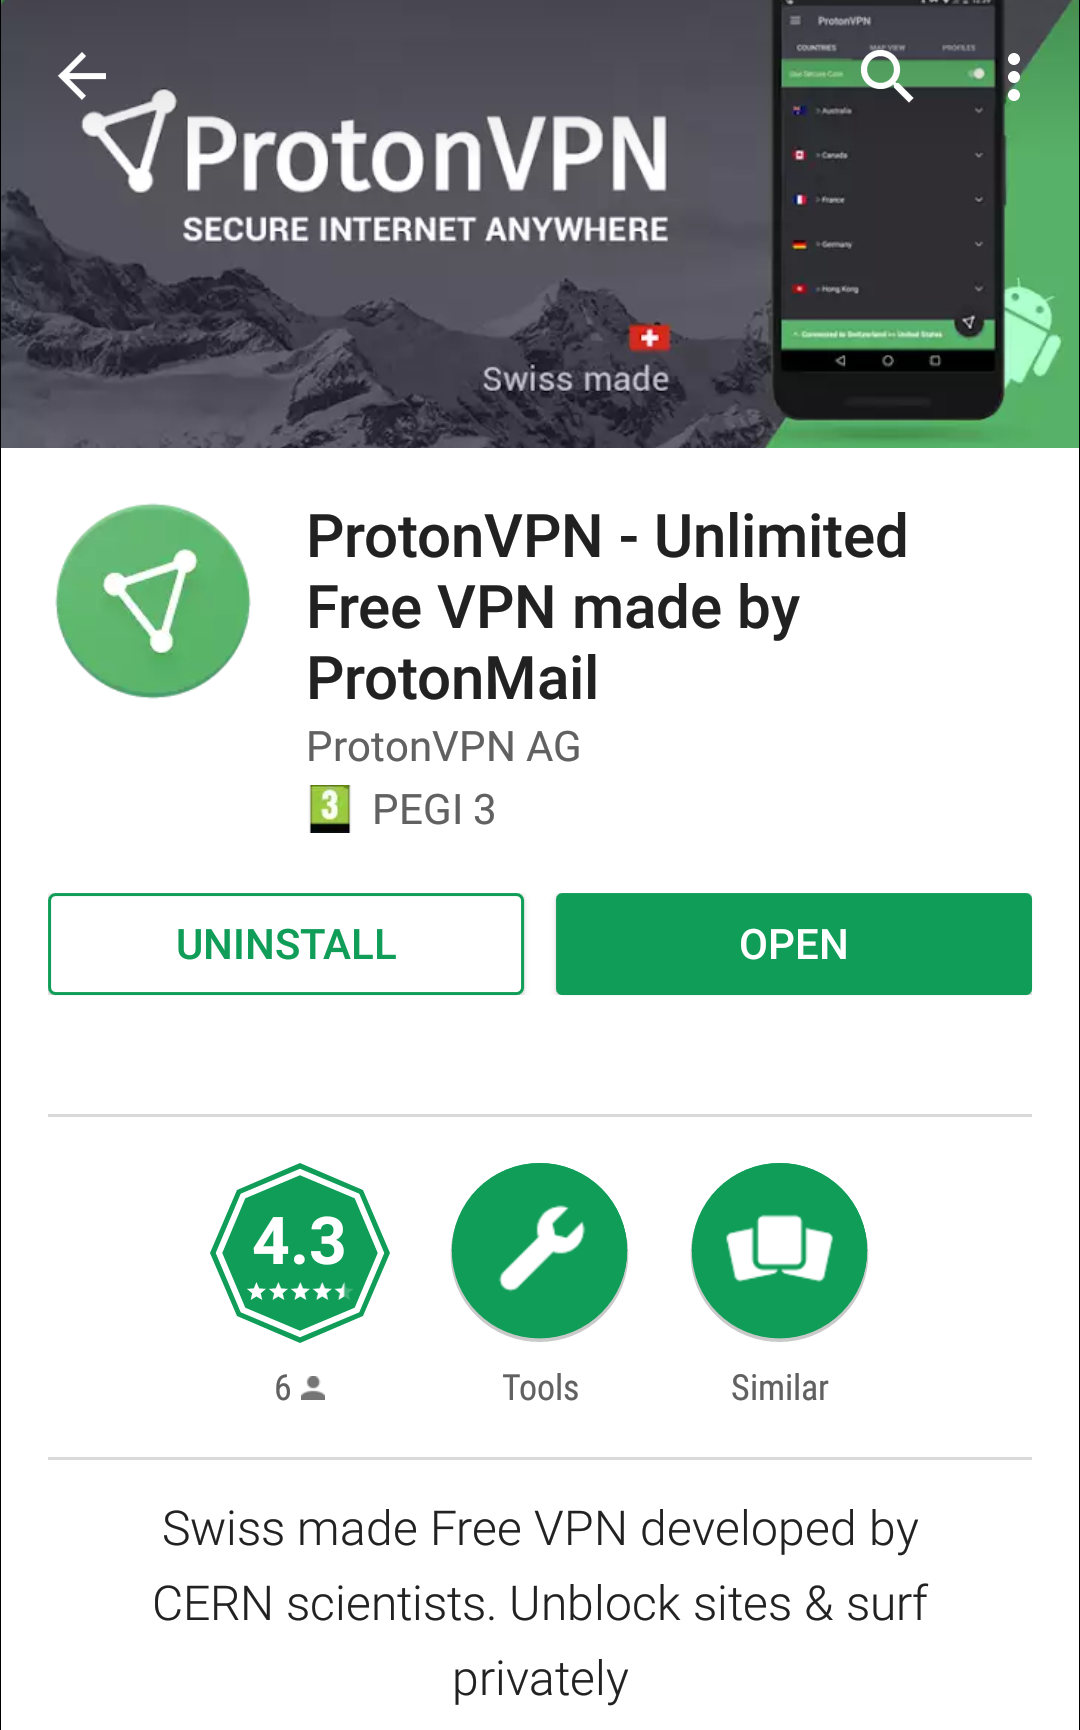 instal the new version for ipod ProtonVPN Free 3.1.0